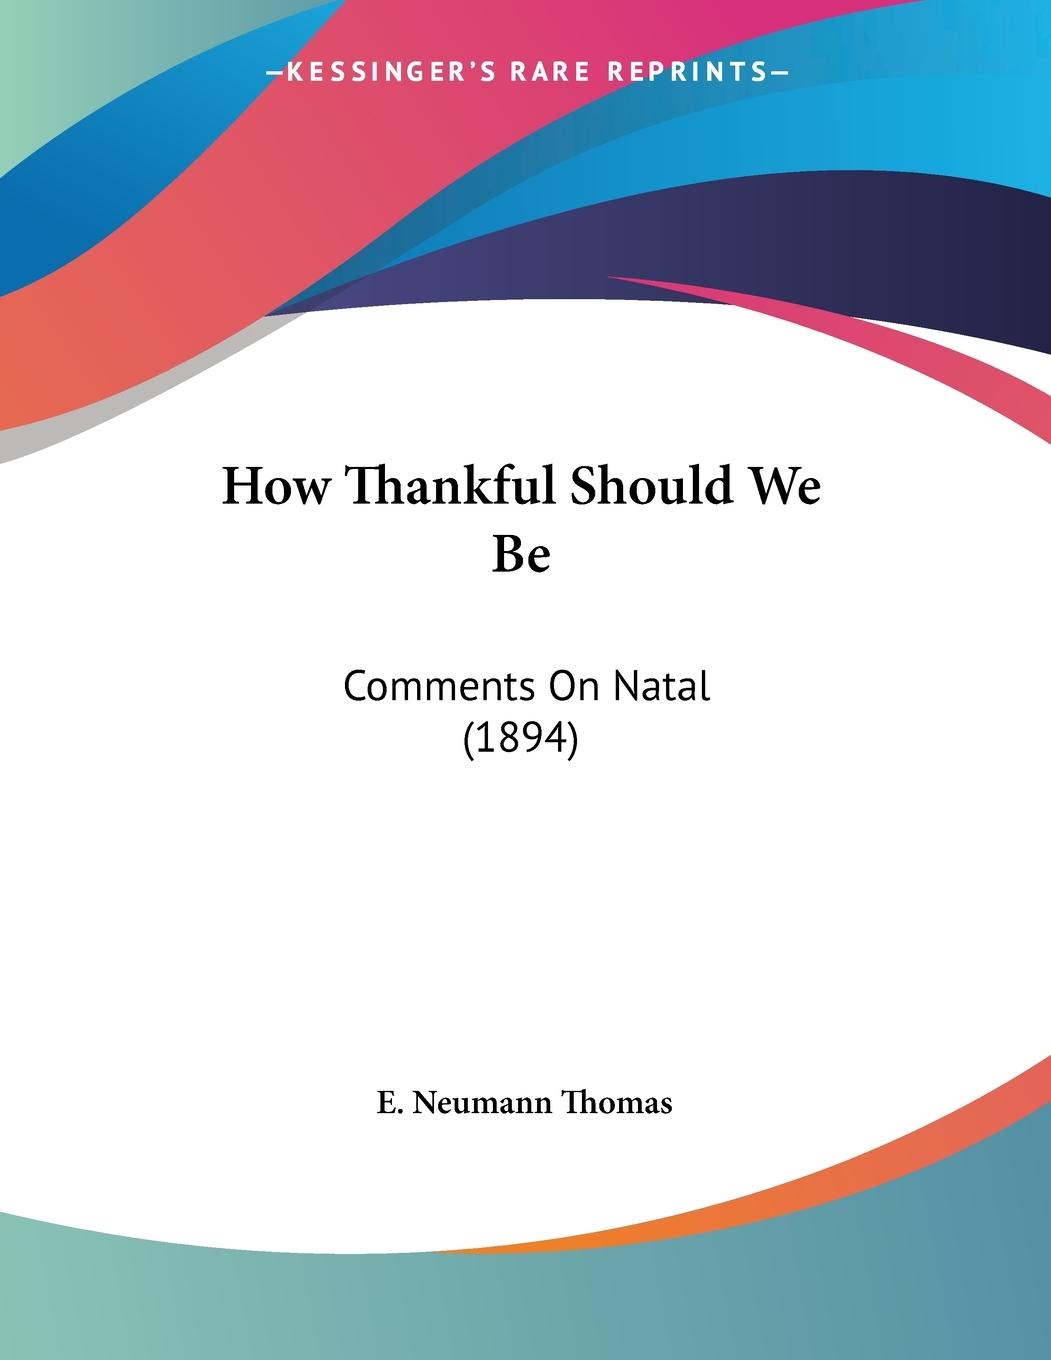 How Thankful Should We Be - Thomas, E. Neumann